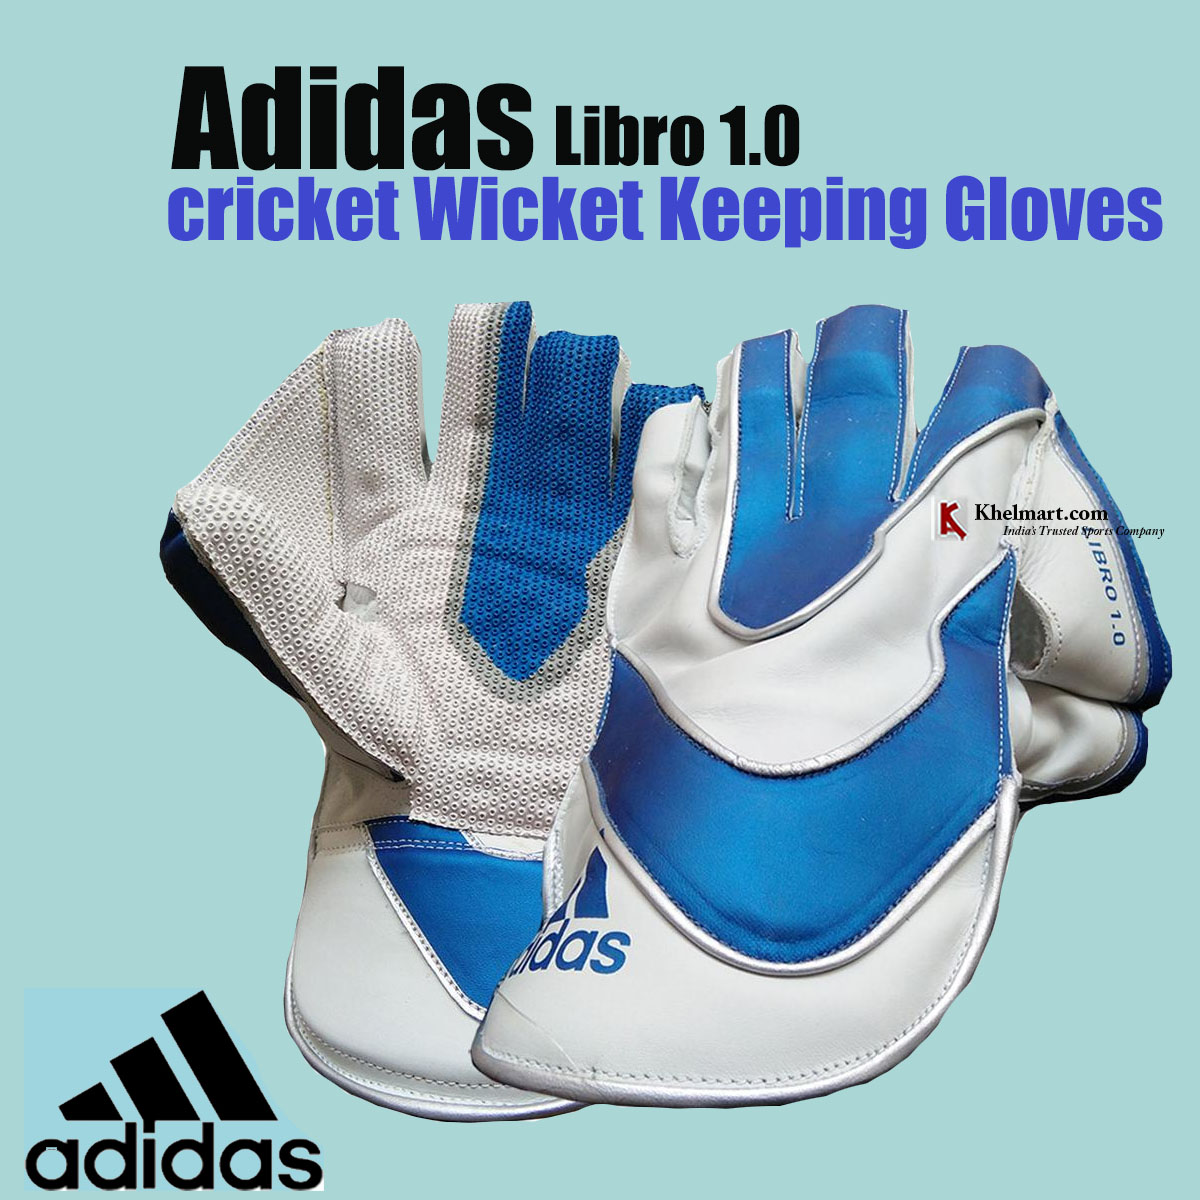 Adidas_Libro_1_0_Cricket_Wicket_Keeping_Gloves_6.jpg